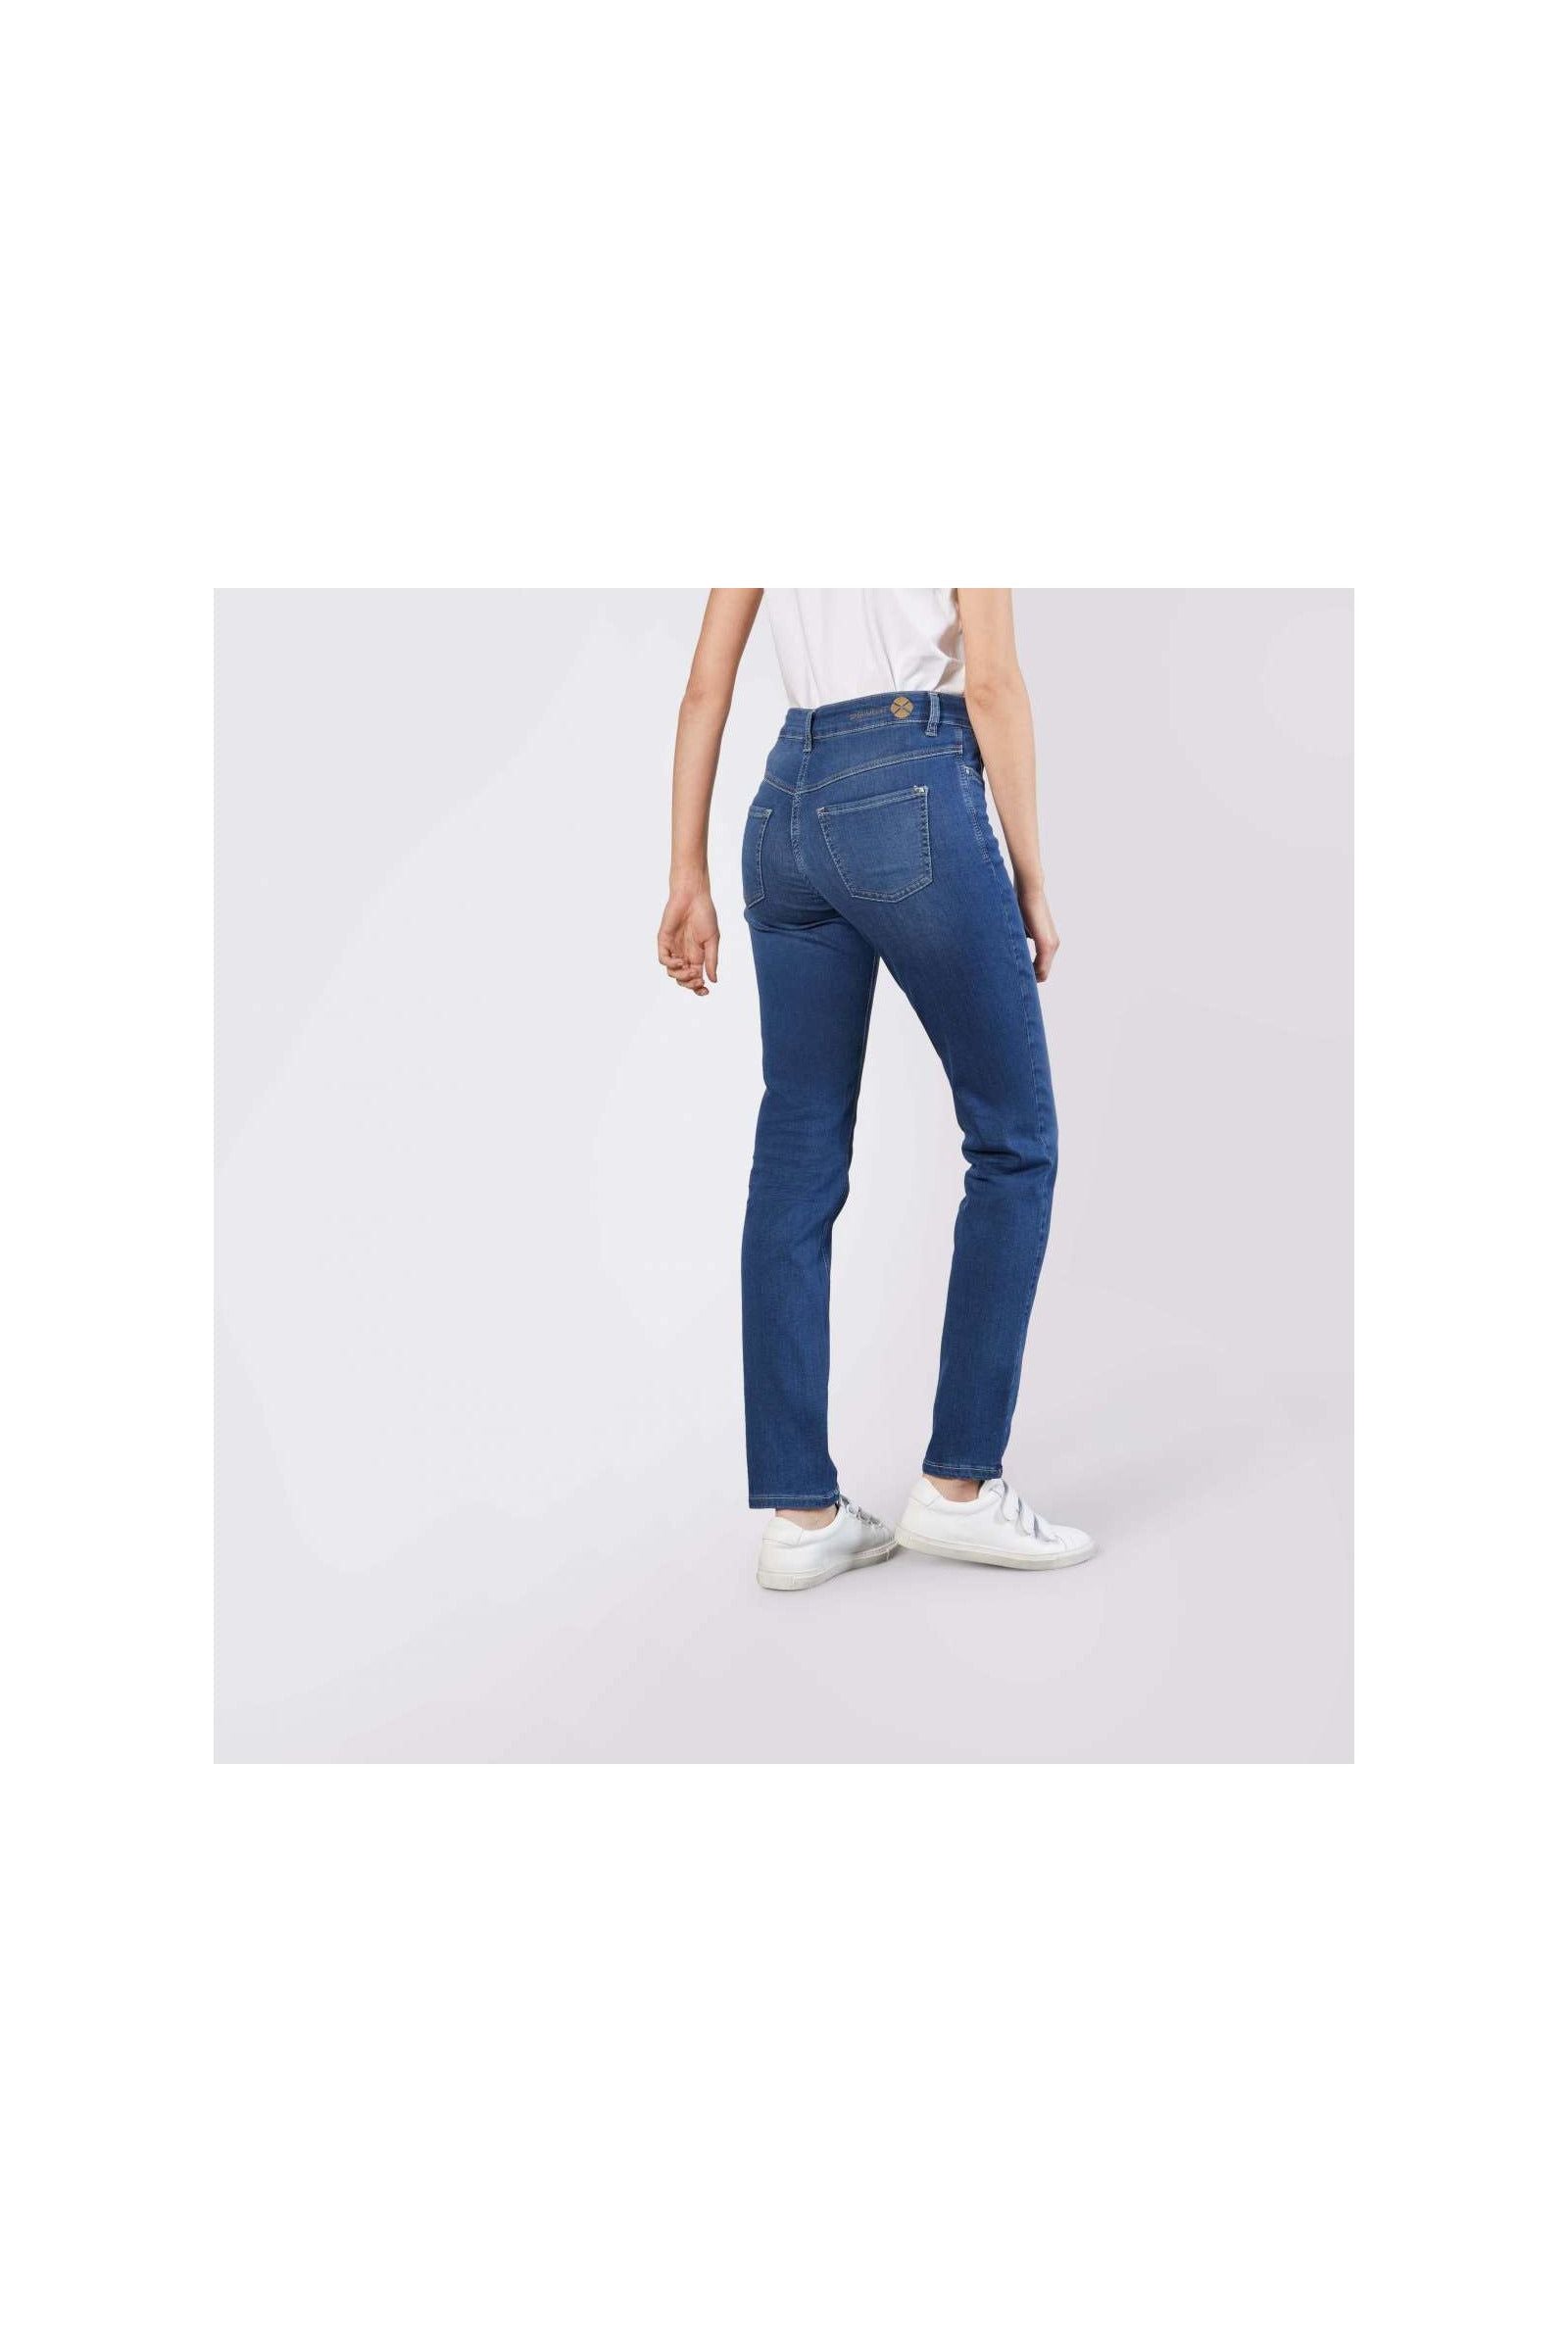 J Brand Mens Solid Cotton Dark Wash Straight Leg Denim Jeans Blue Size -  Shop Linda's Stuff